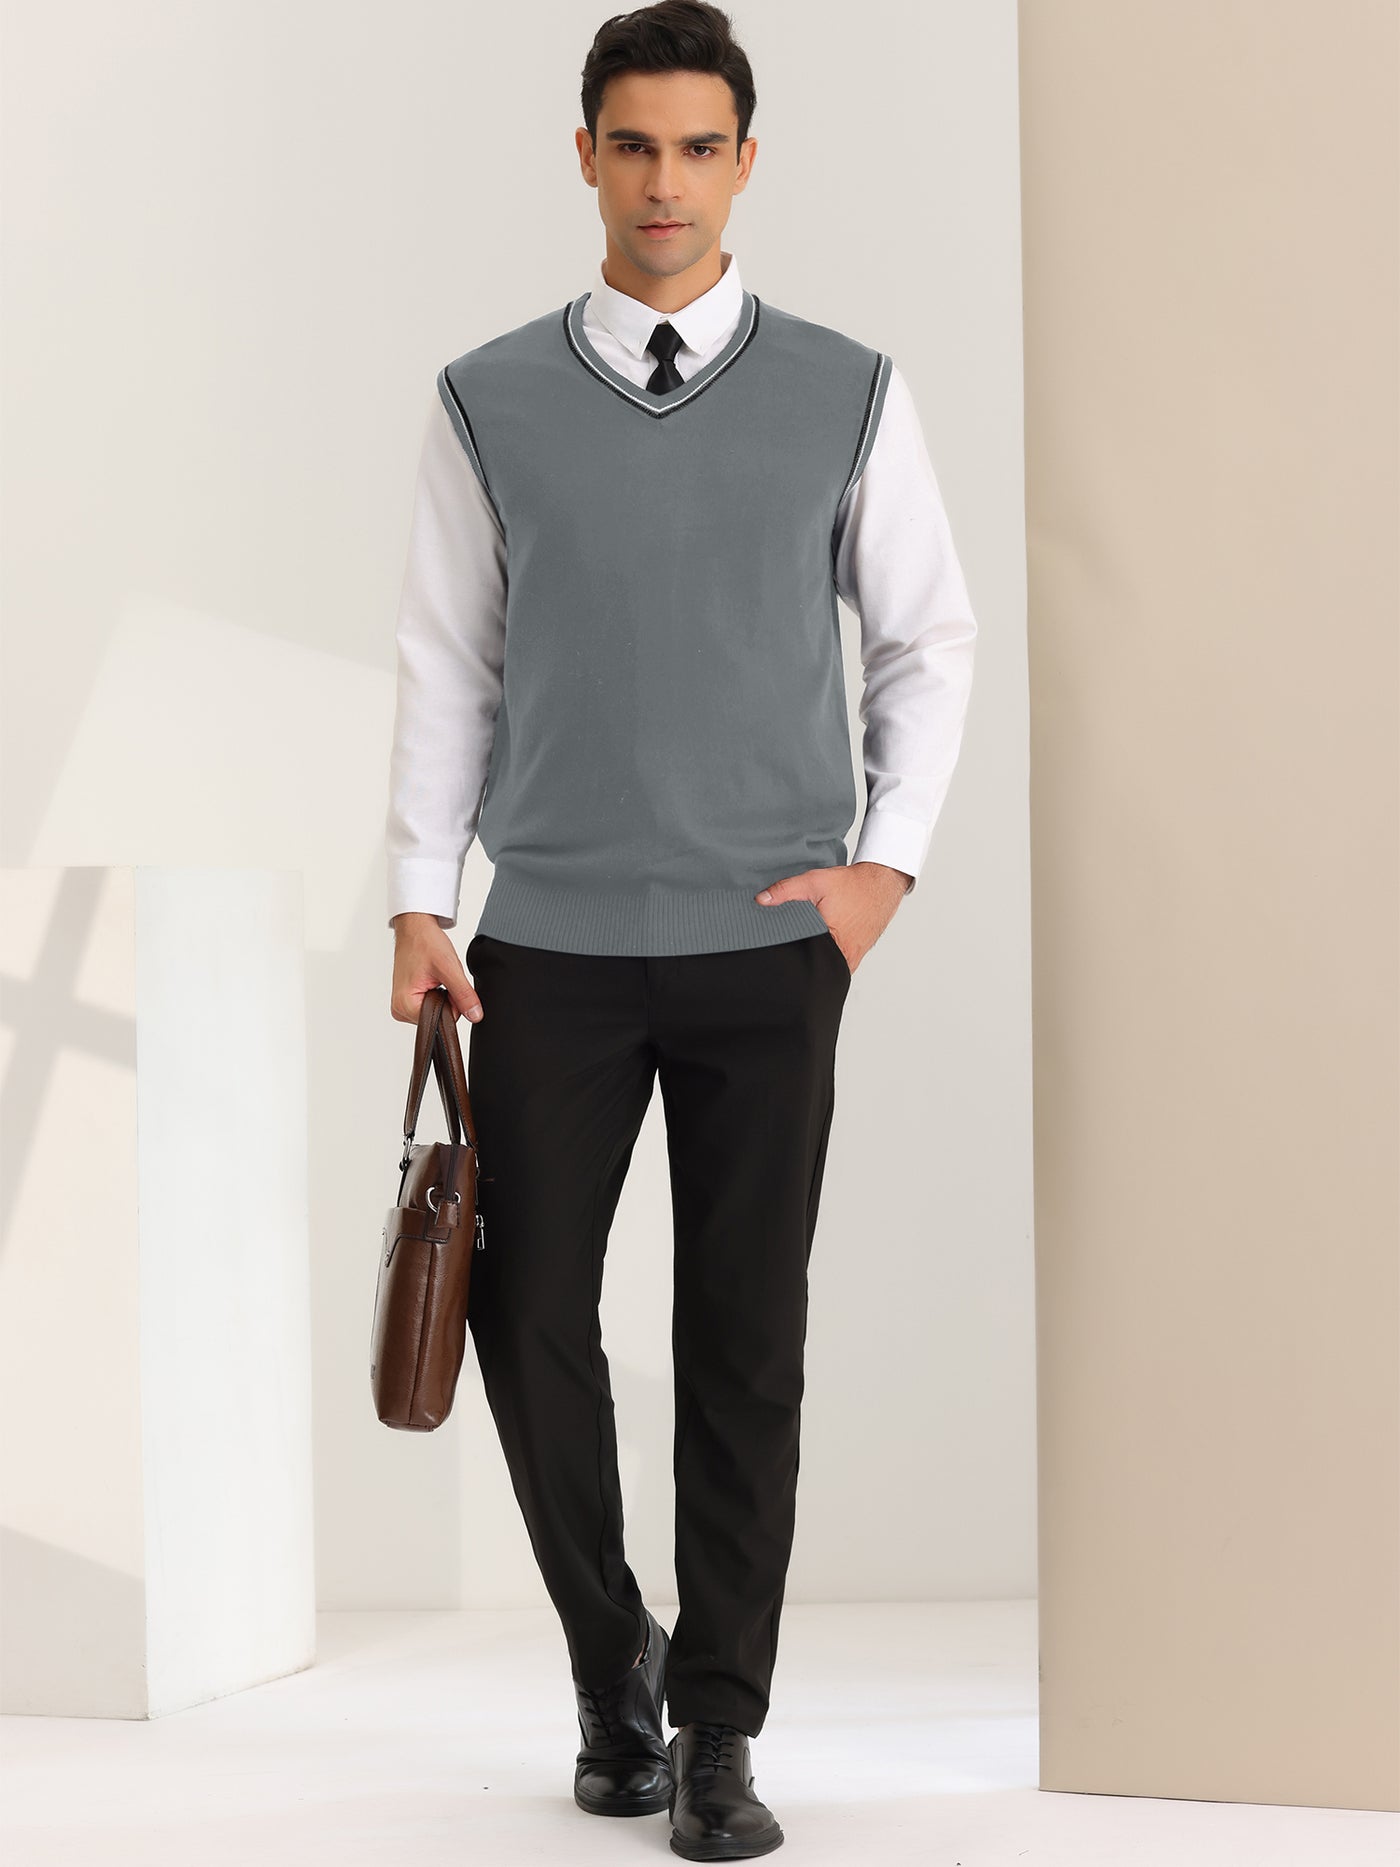 Bublédon Men's Business Slim Fit V Neck Sleeveless Knitted Pullover Sweater Vest